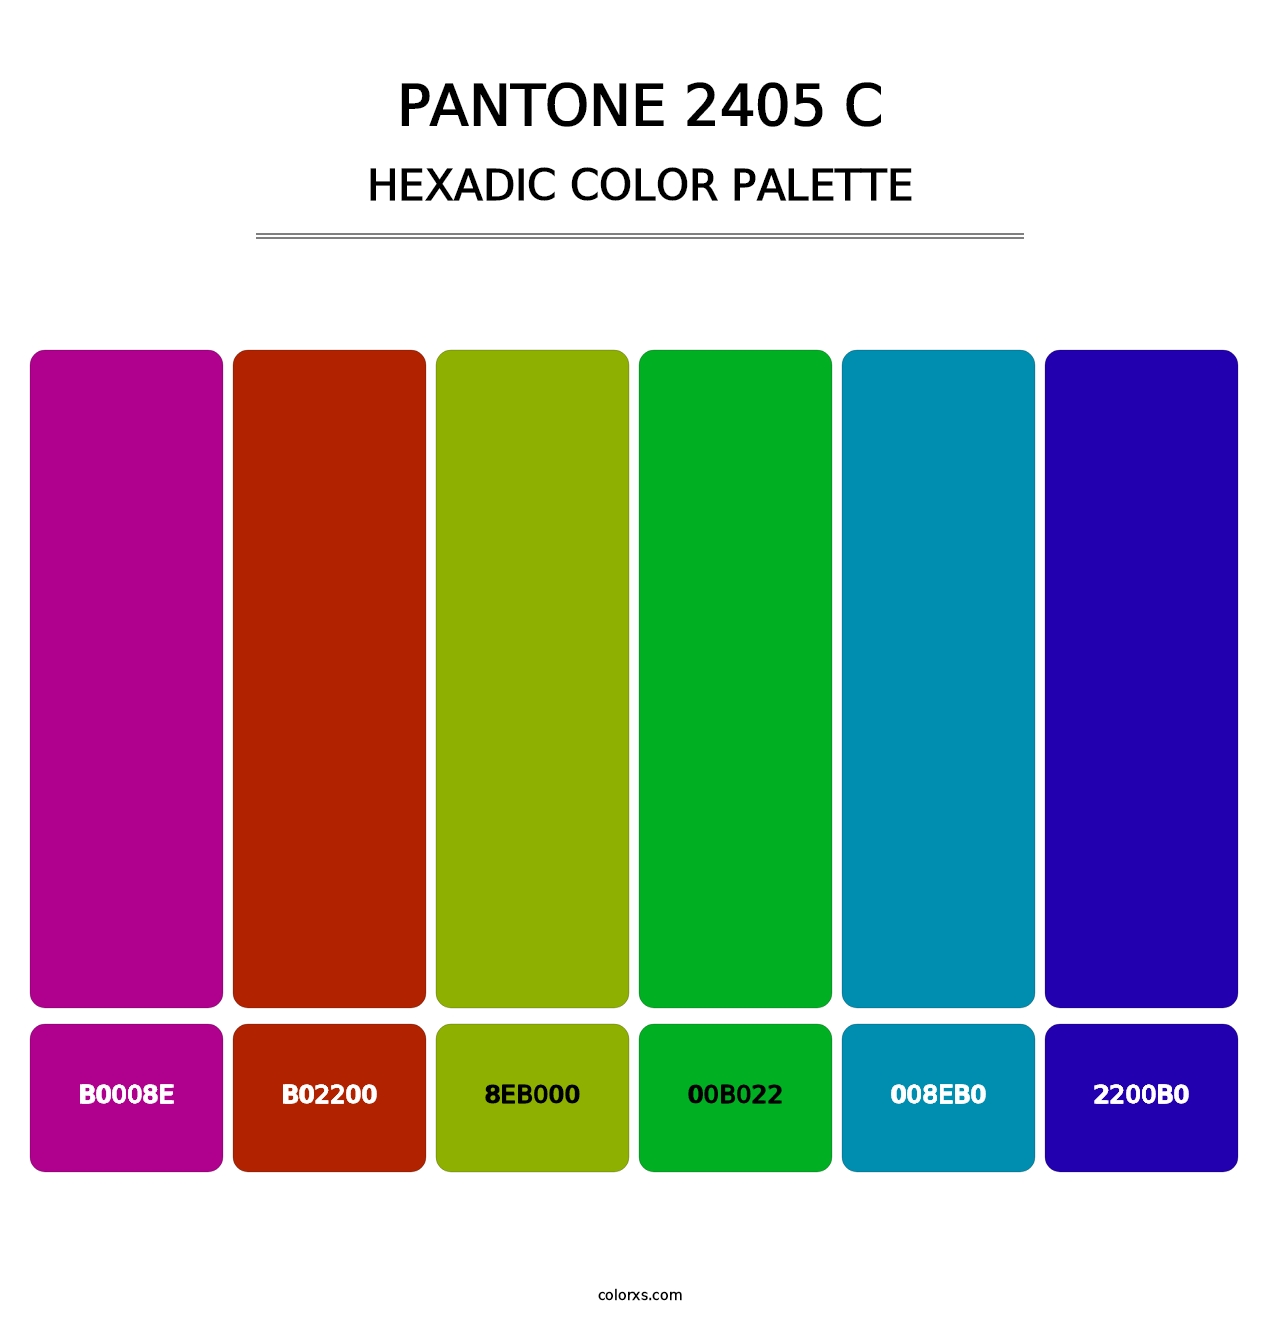 PANTONE 2405 C - Hexadic Color Palette